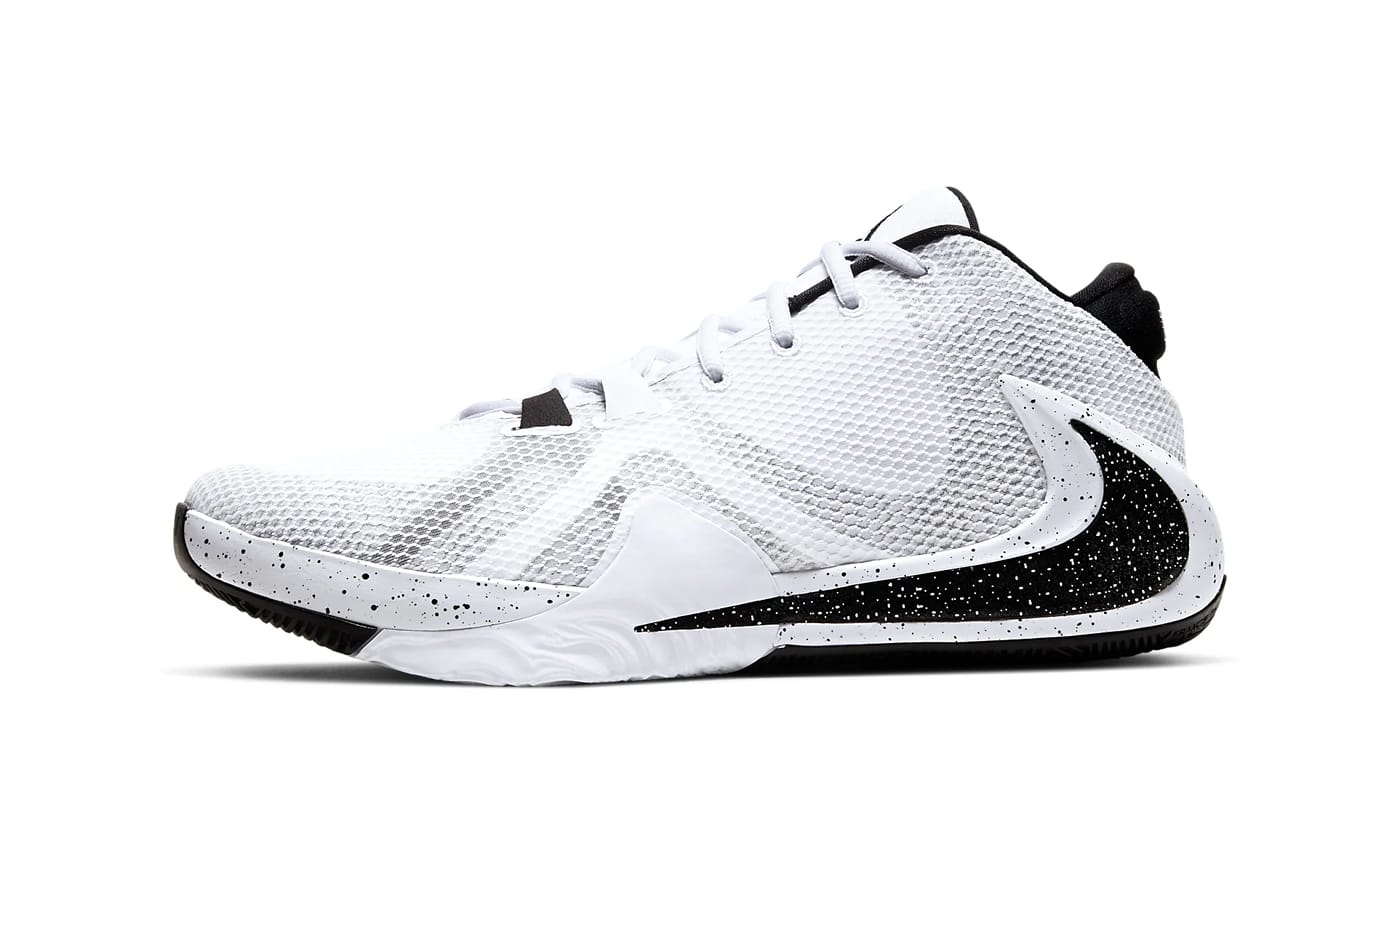 Nike Kyrie 6 Basketball Shoes SCHEELS.com